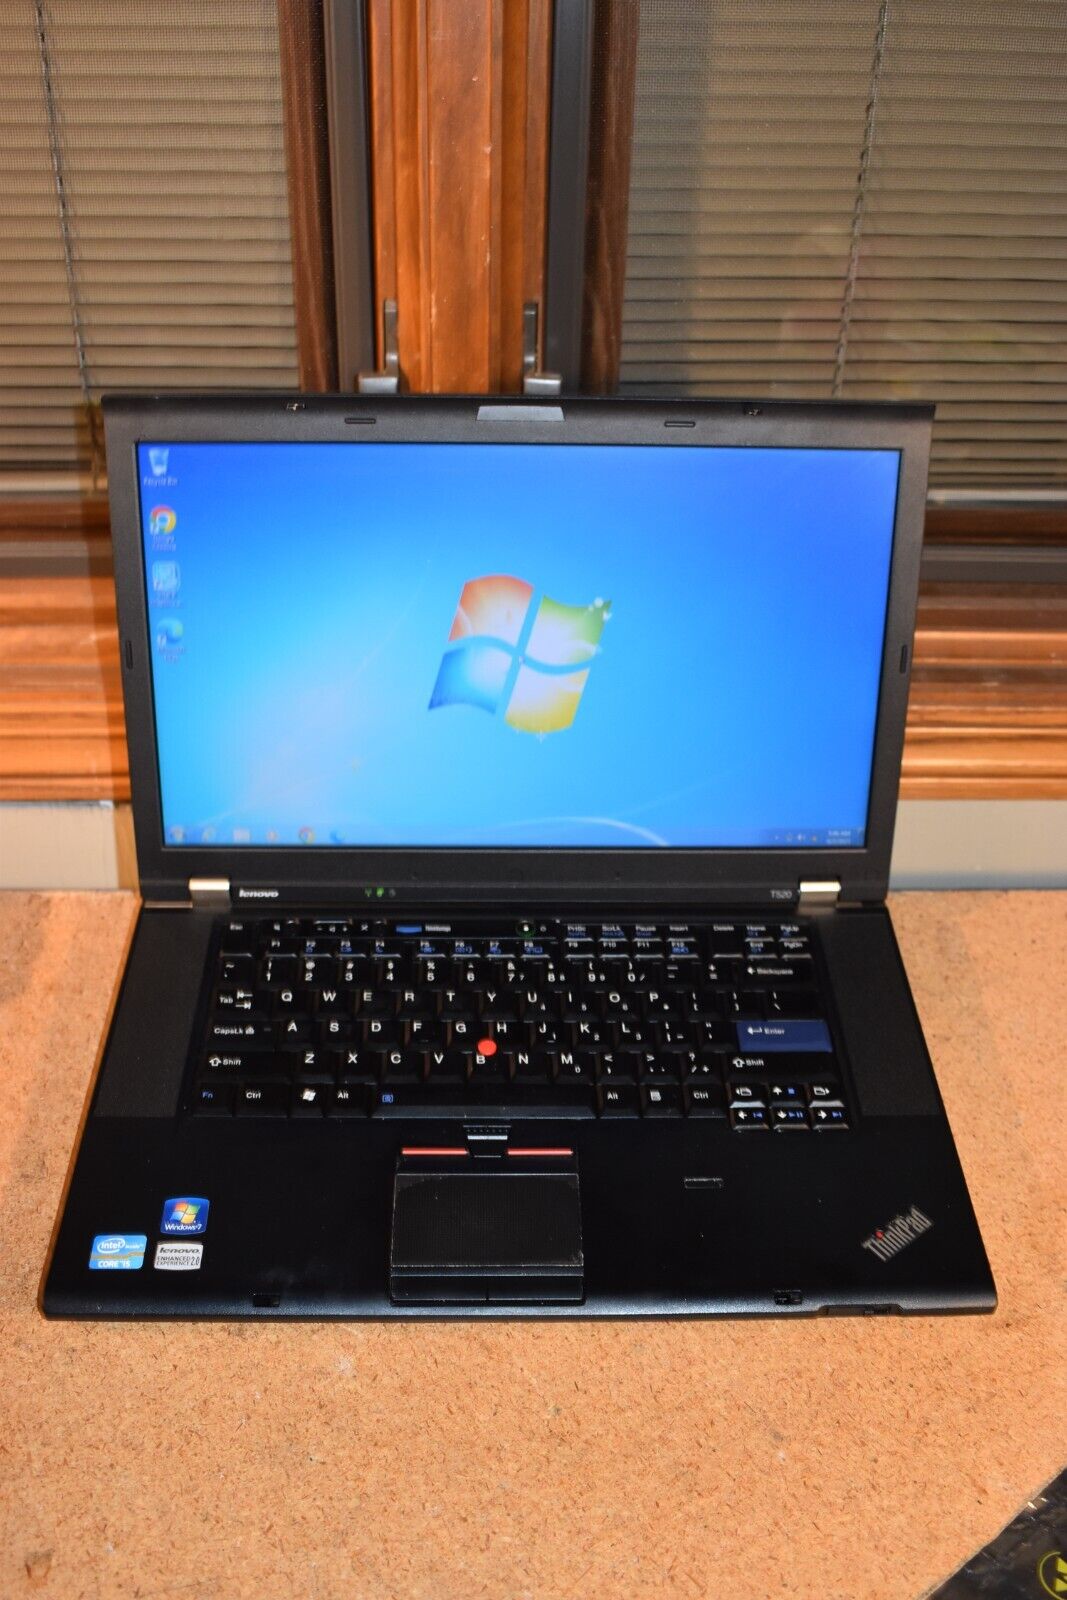 Lenovo ThinkPad T520 Core i5-2520M 2.5GHz 4GB RAM 80G SSD Windows 7 Pro 32-bit